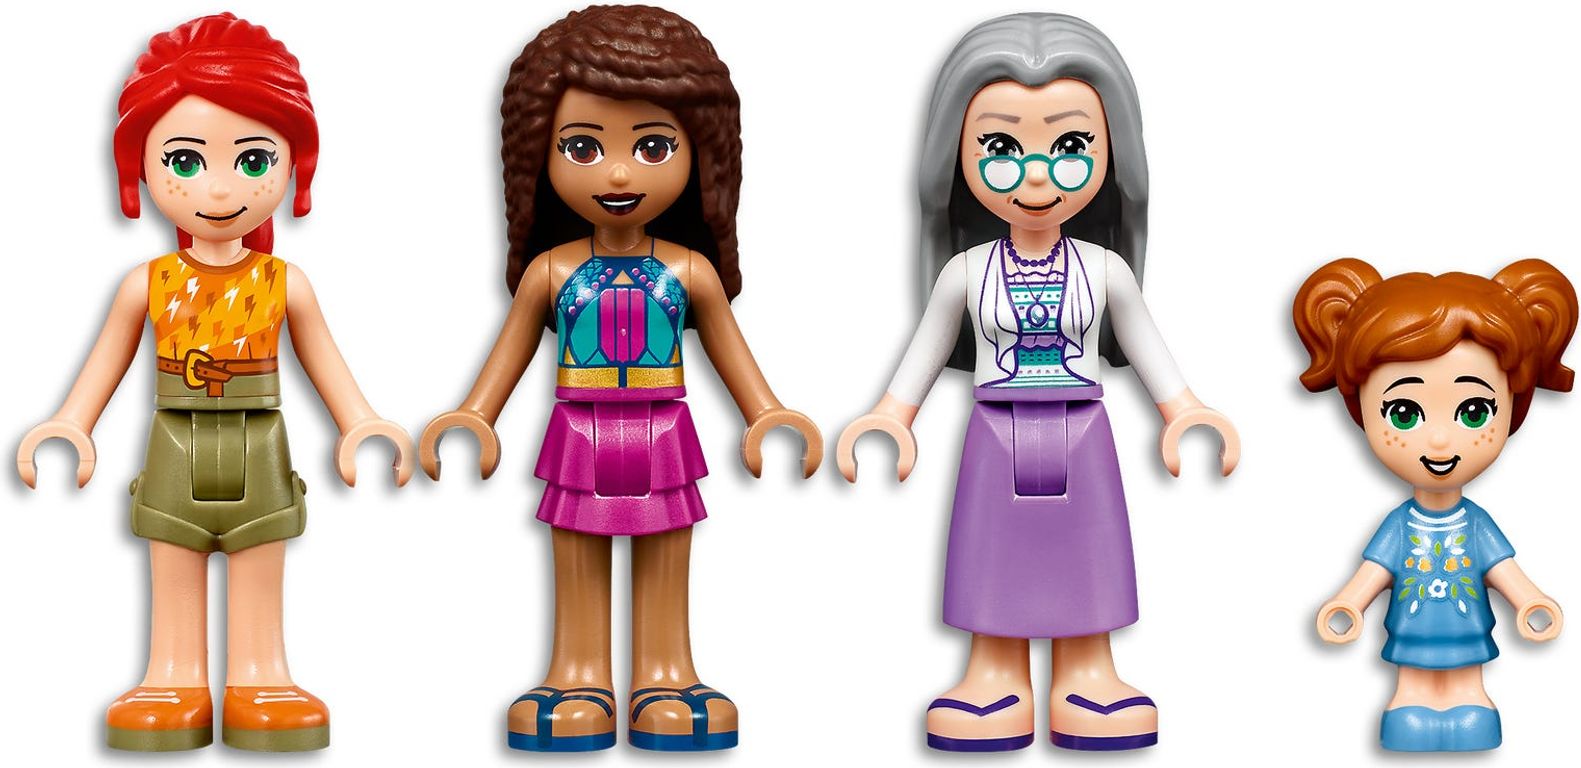 LEGO® Friends Surfer Beachfront minifigures